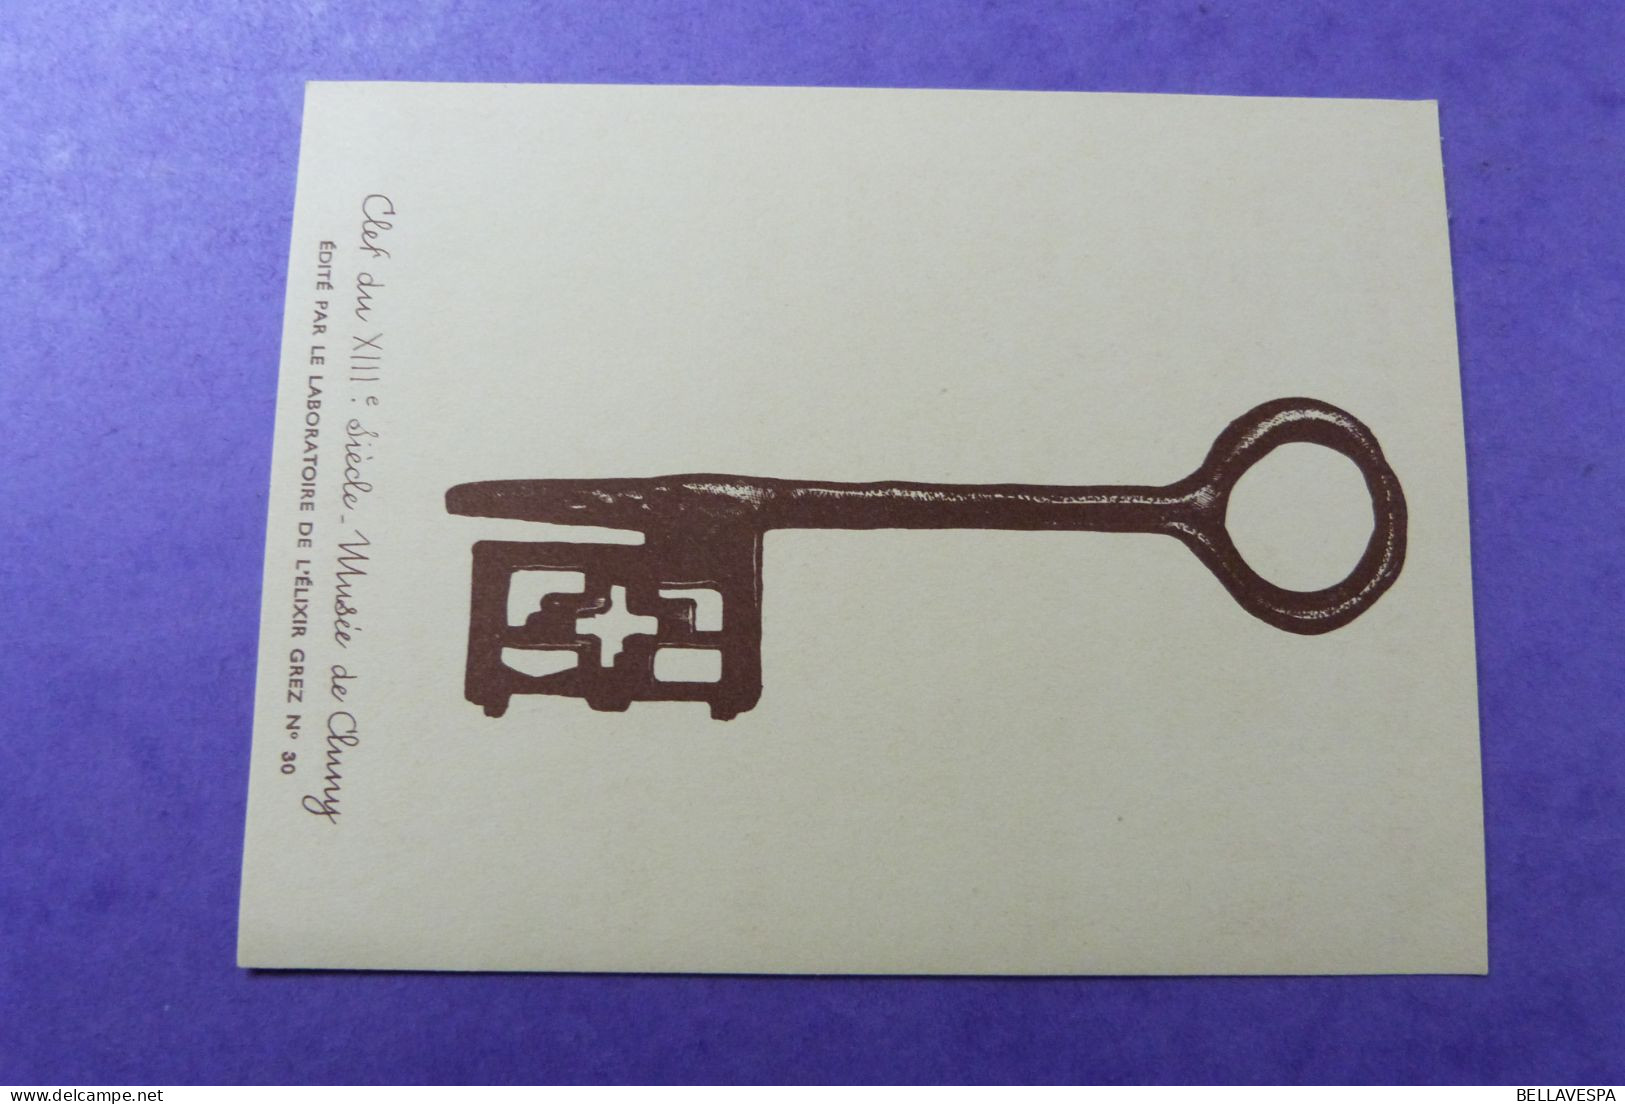 sleutel sleutels clé Musee de Cluny lot x 9 stuks Pub Healt Pharma edit Labo MONIN Paris 9 e